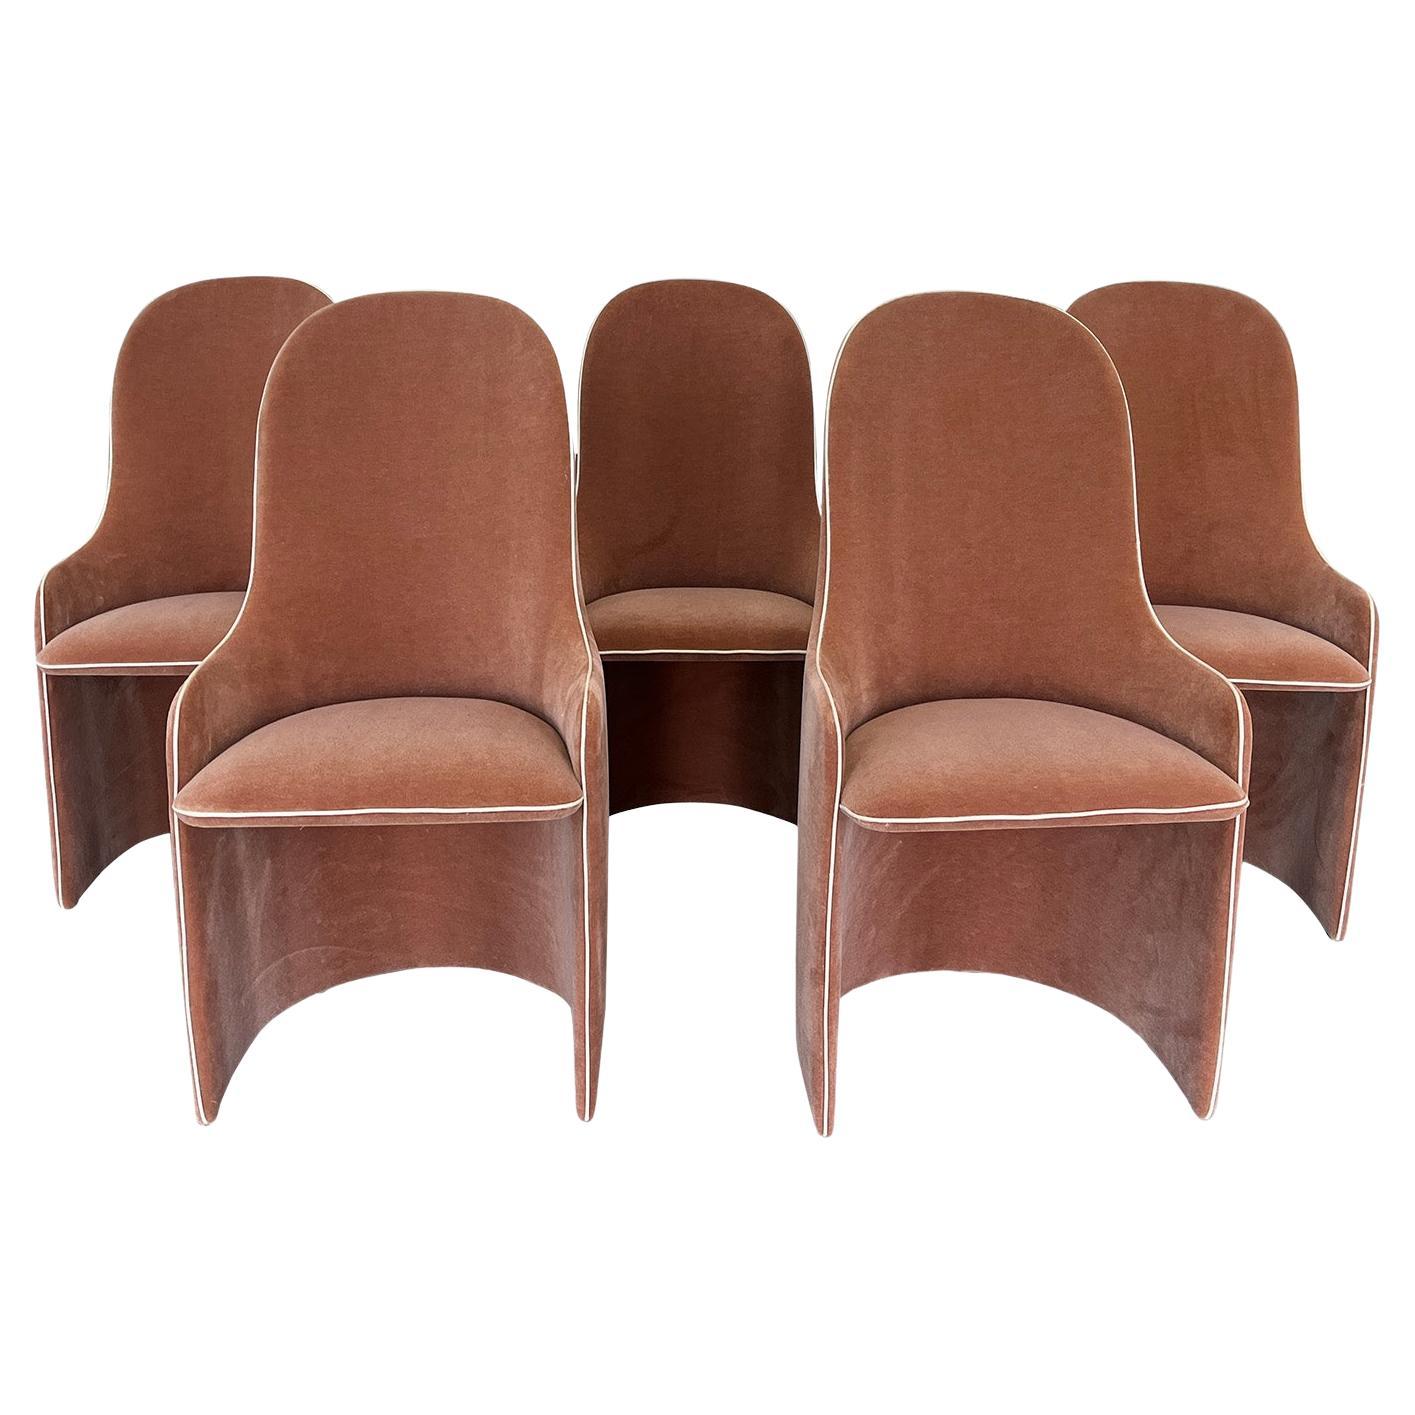 Set of 5 Italian Post-Modern Barrel-Back Dining Chairs